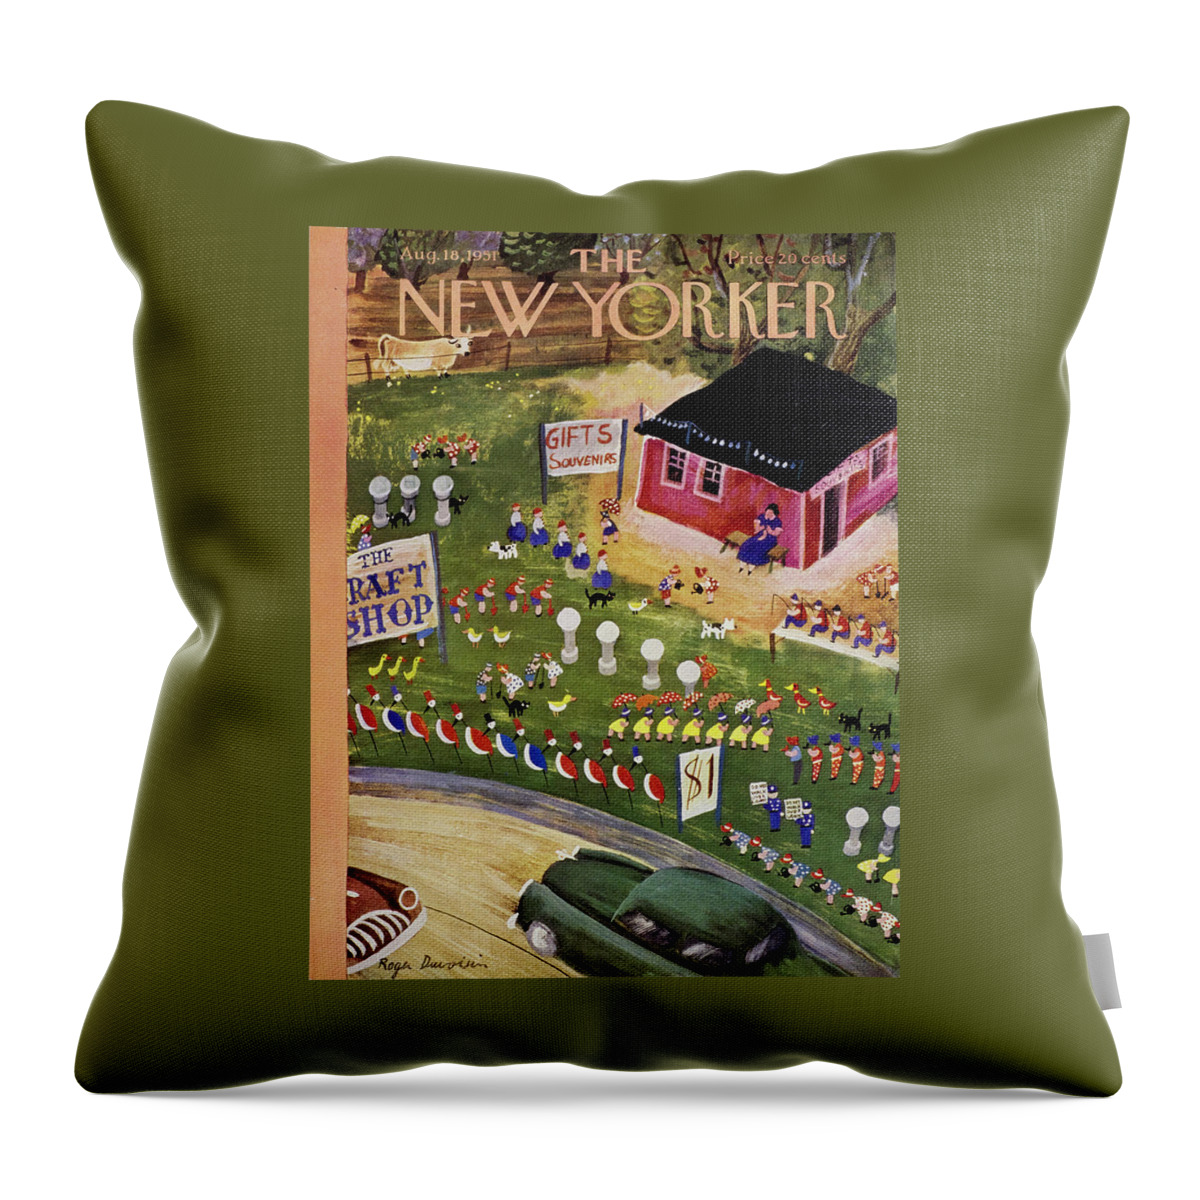 New Yorker August 18 1951 Throw Pillow